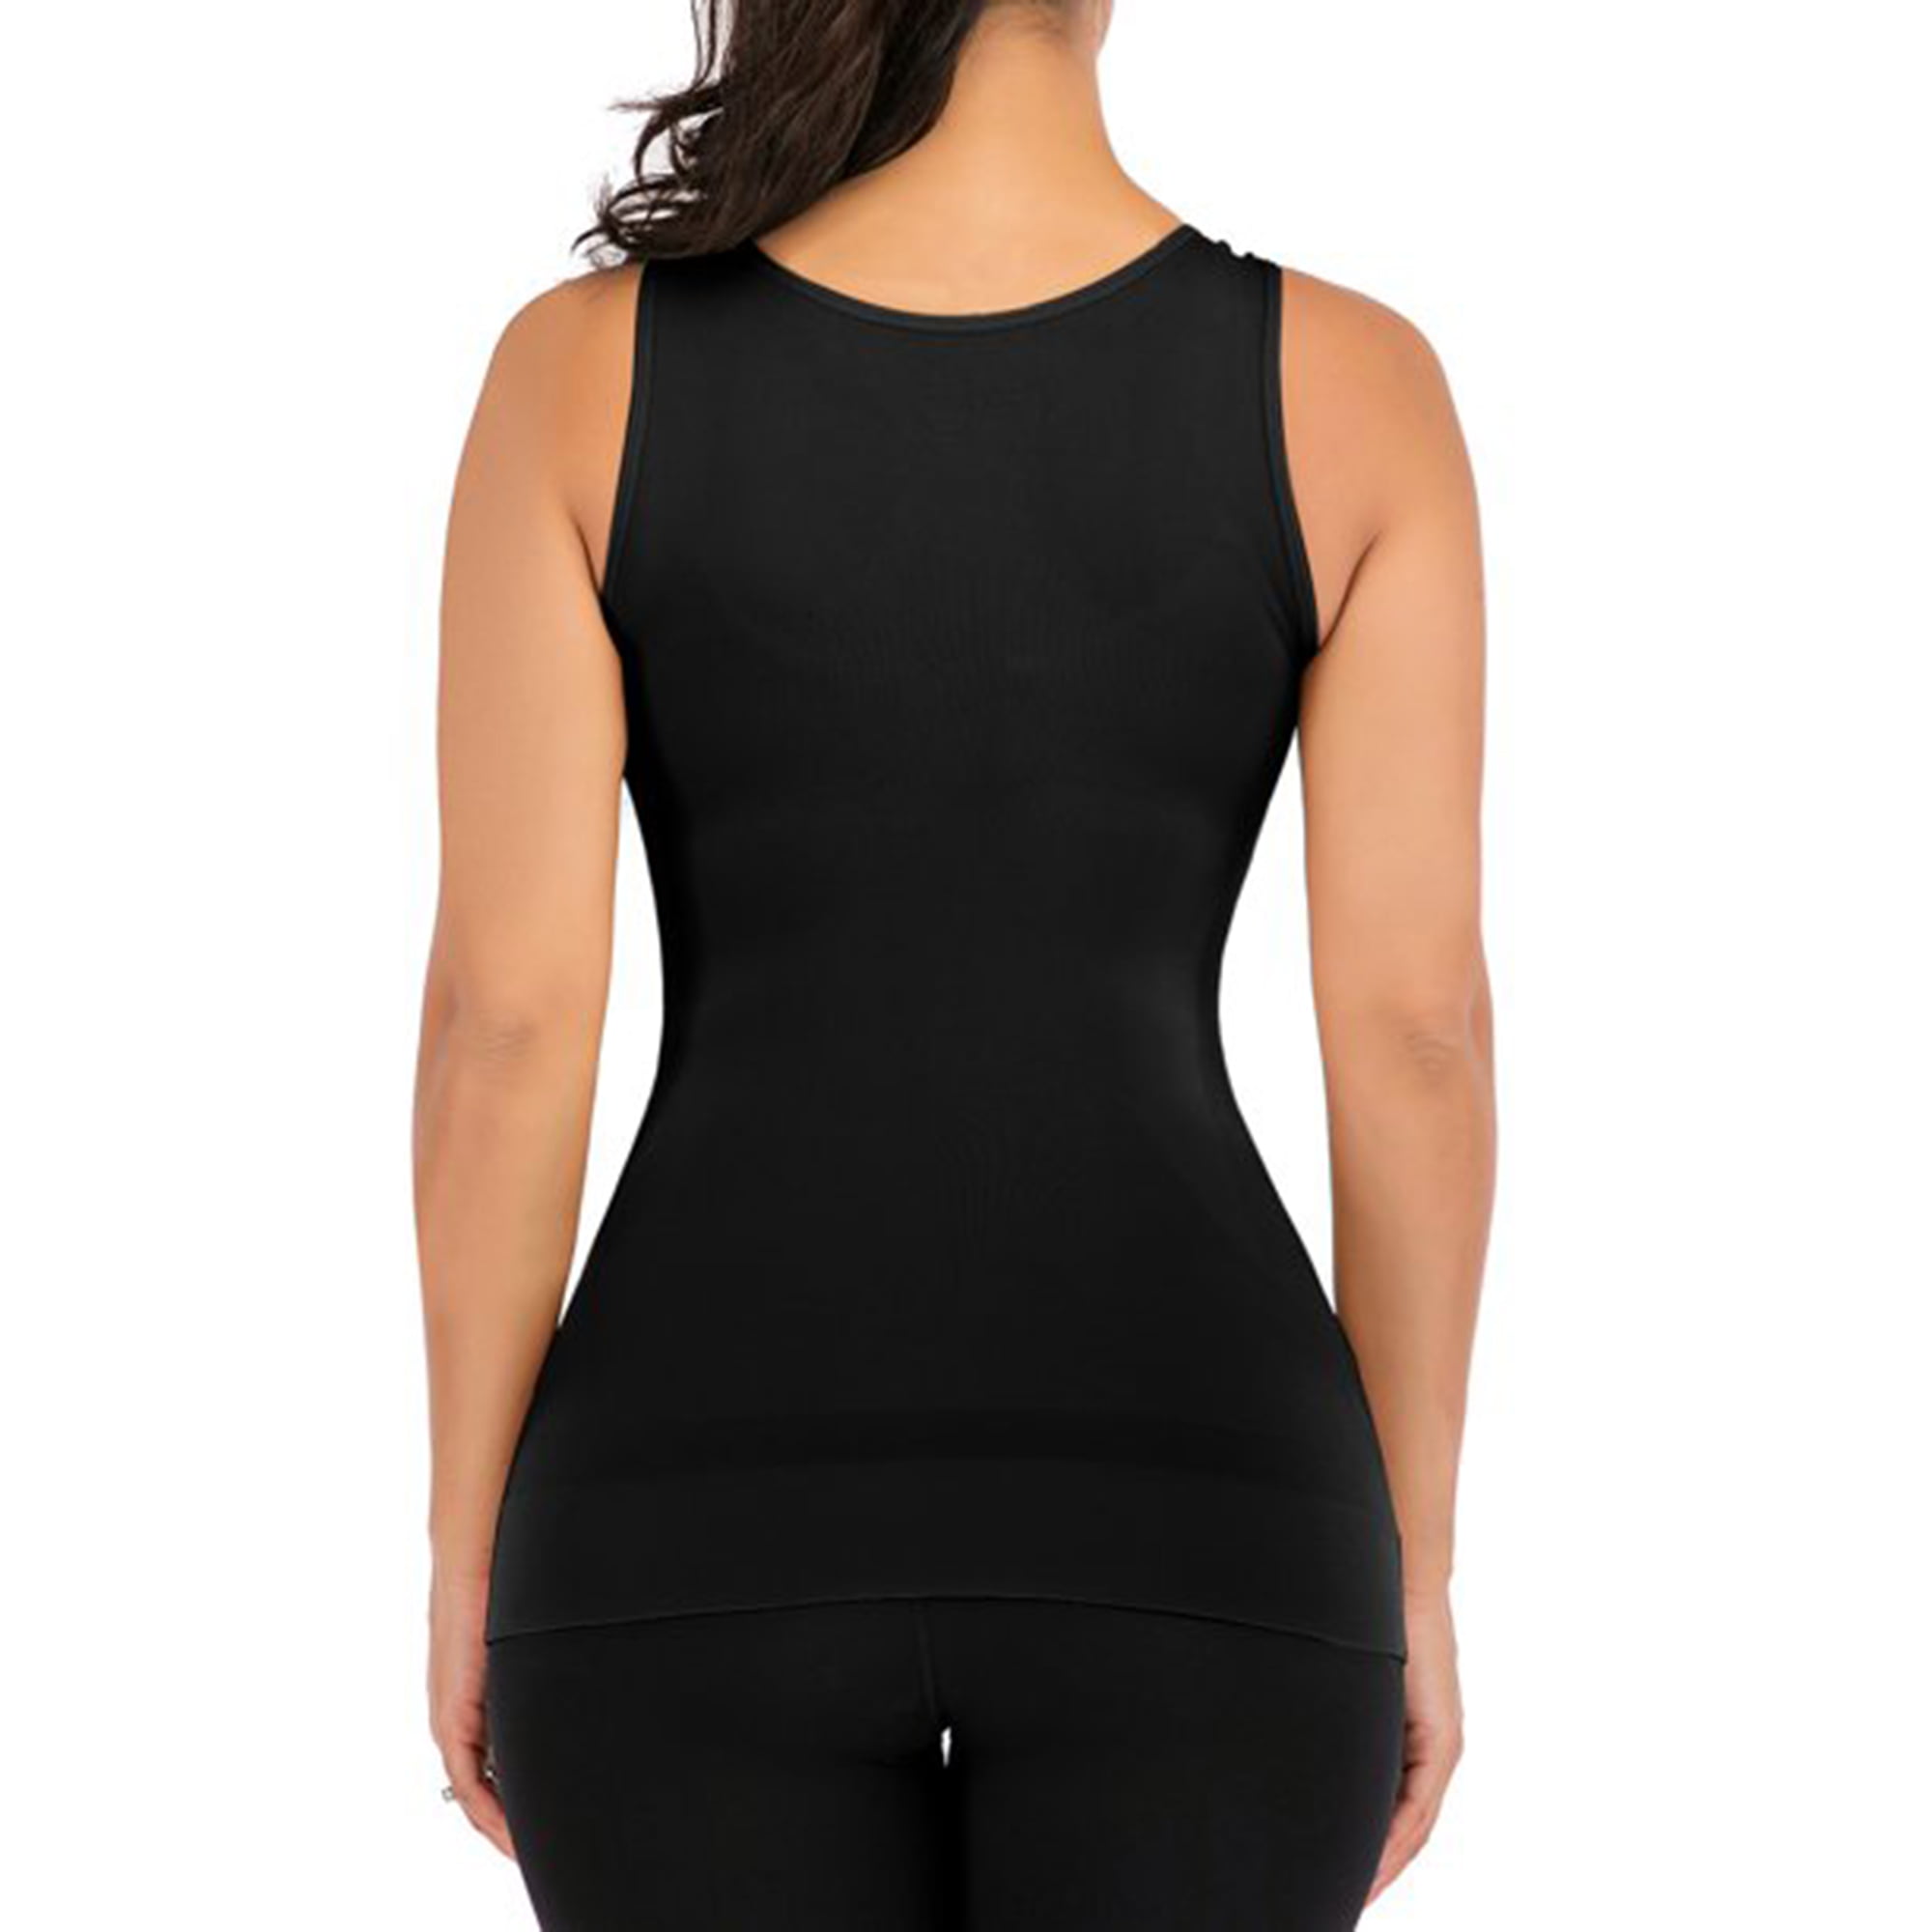 FALEXO Women's Shapewear Tank Tops Slimming Padded Seamless Compression  Body Shaper Top Plus Size